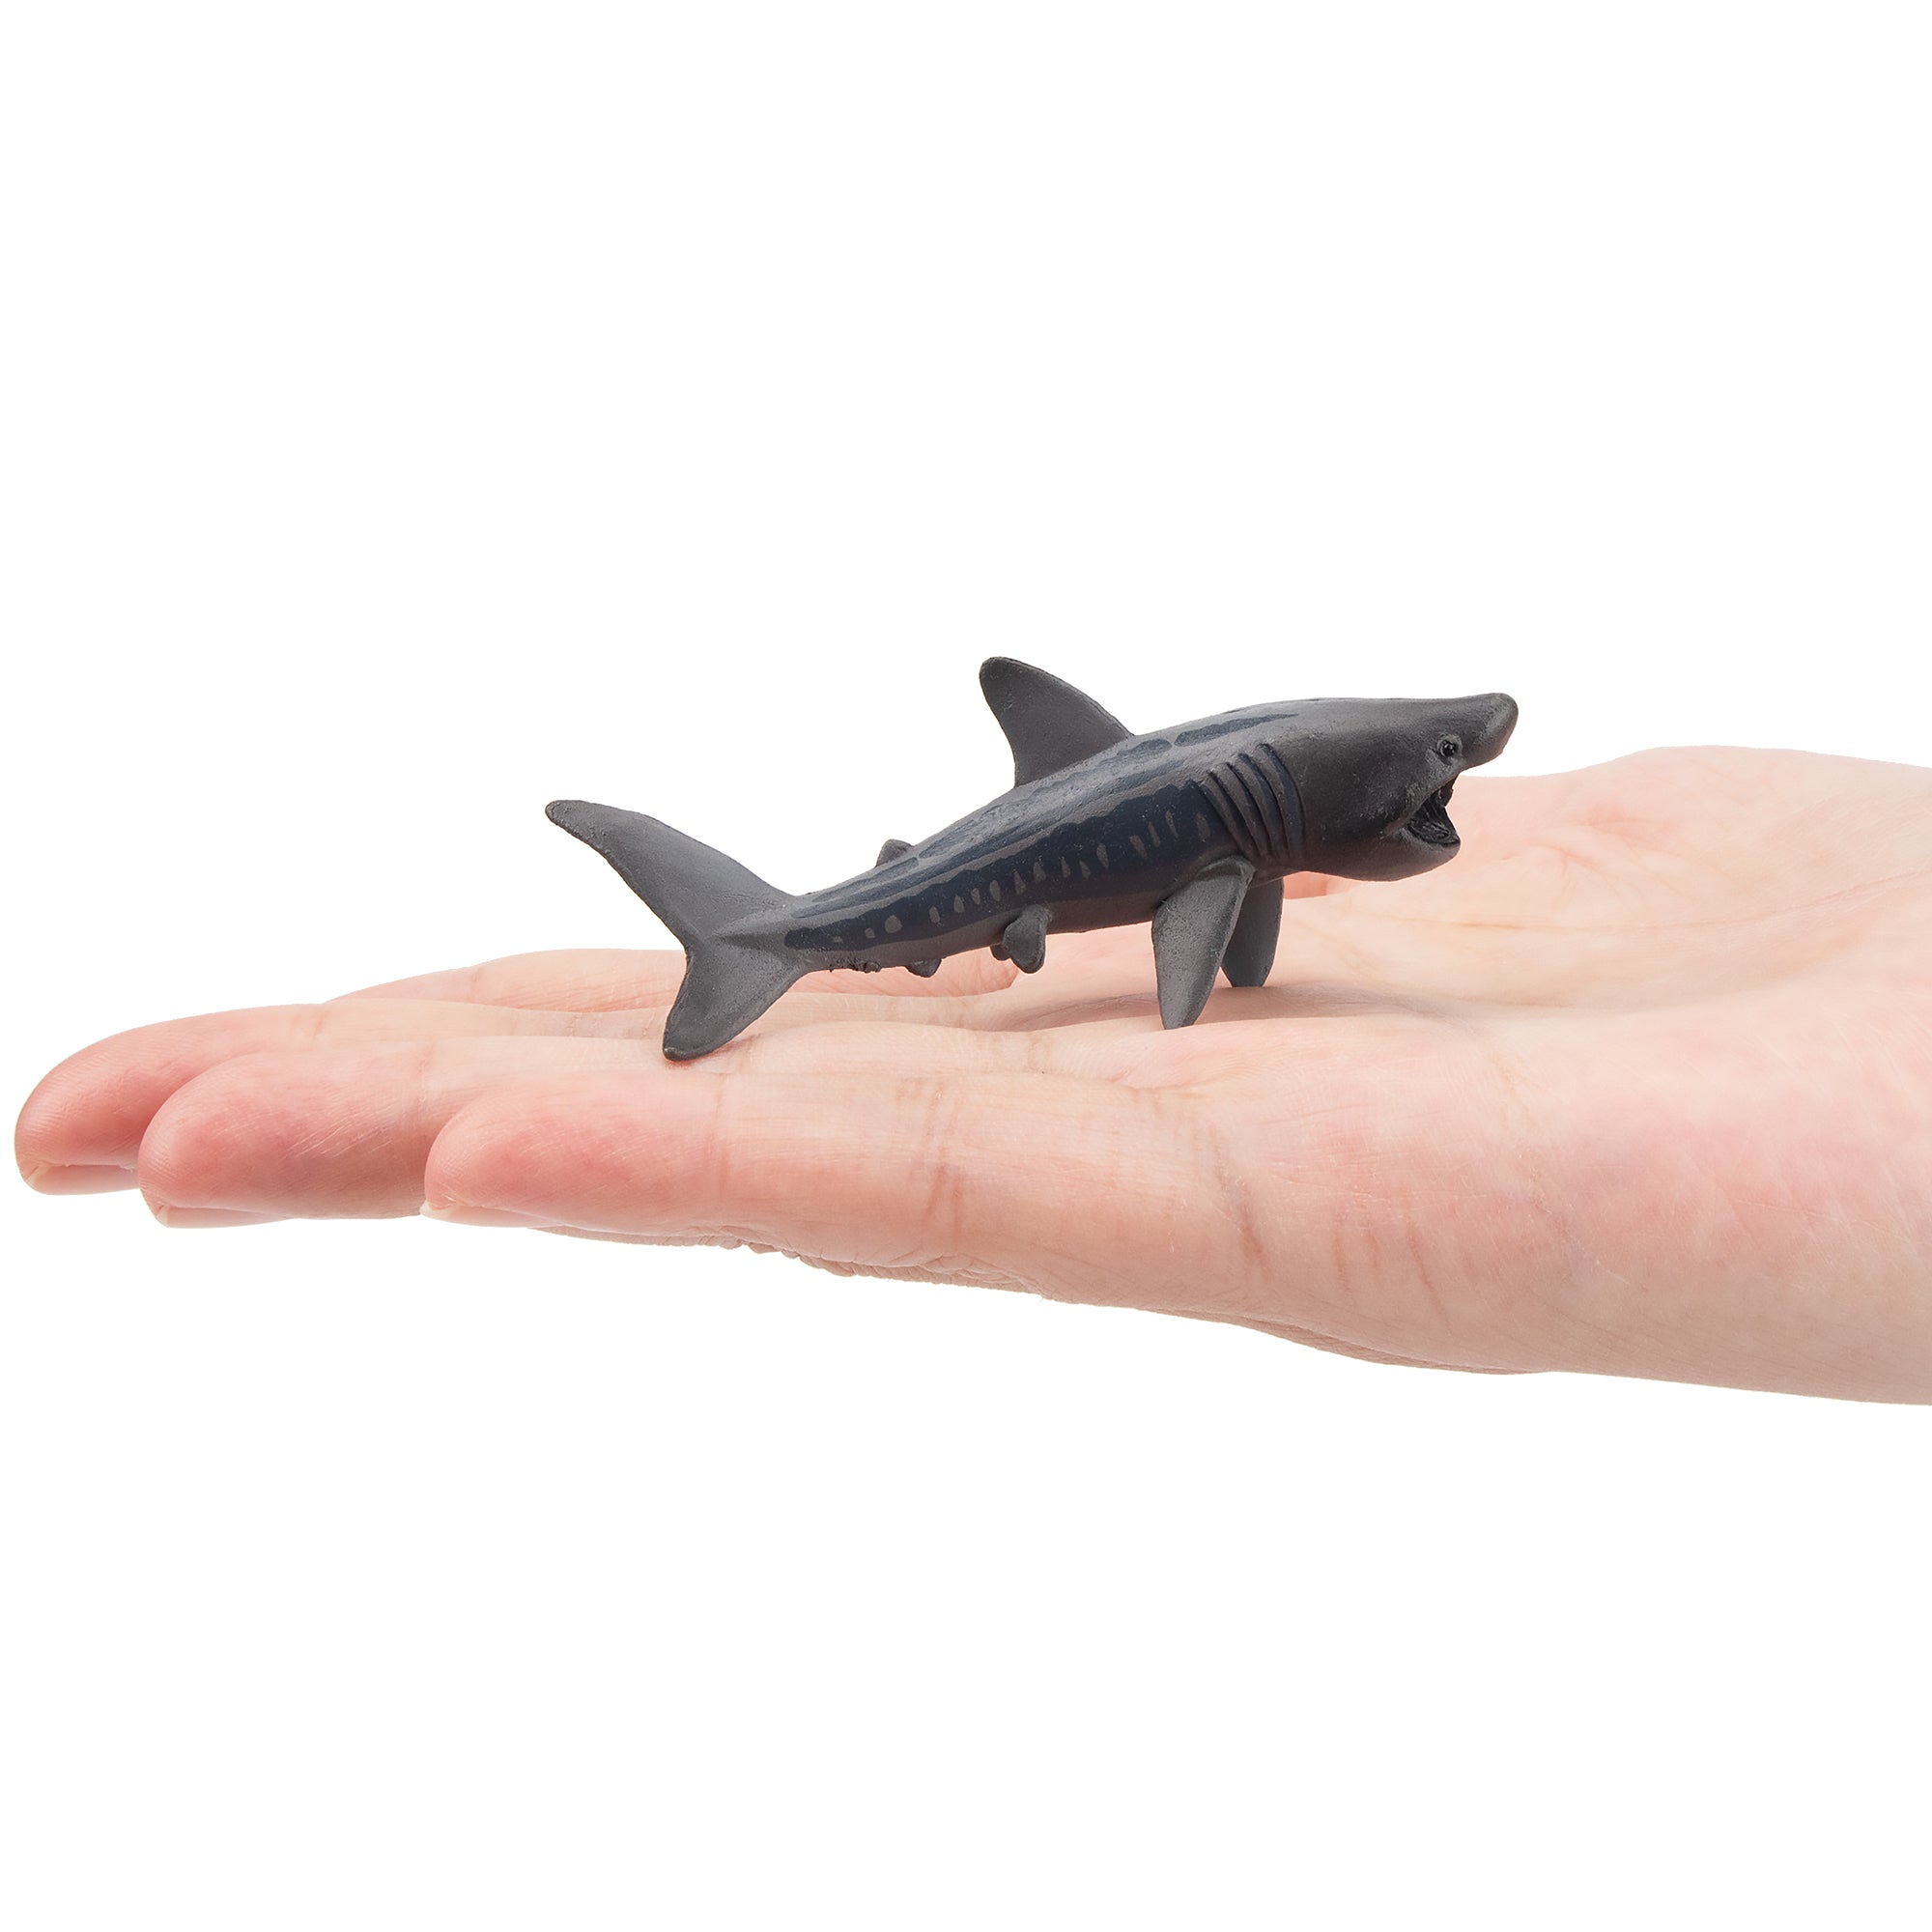 Toymany Basking Shark Figurine Toy-on hand